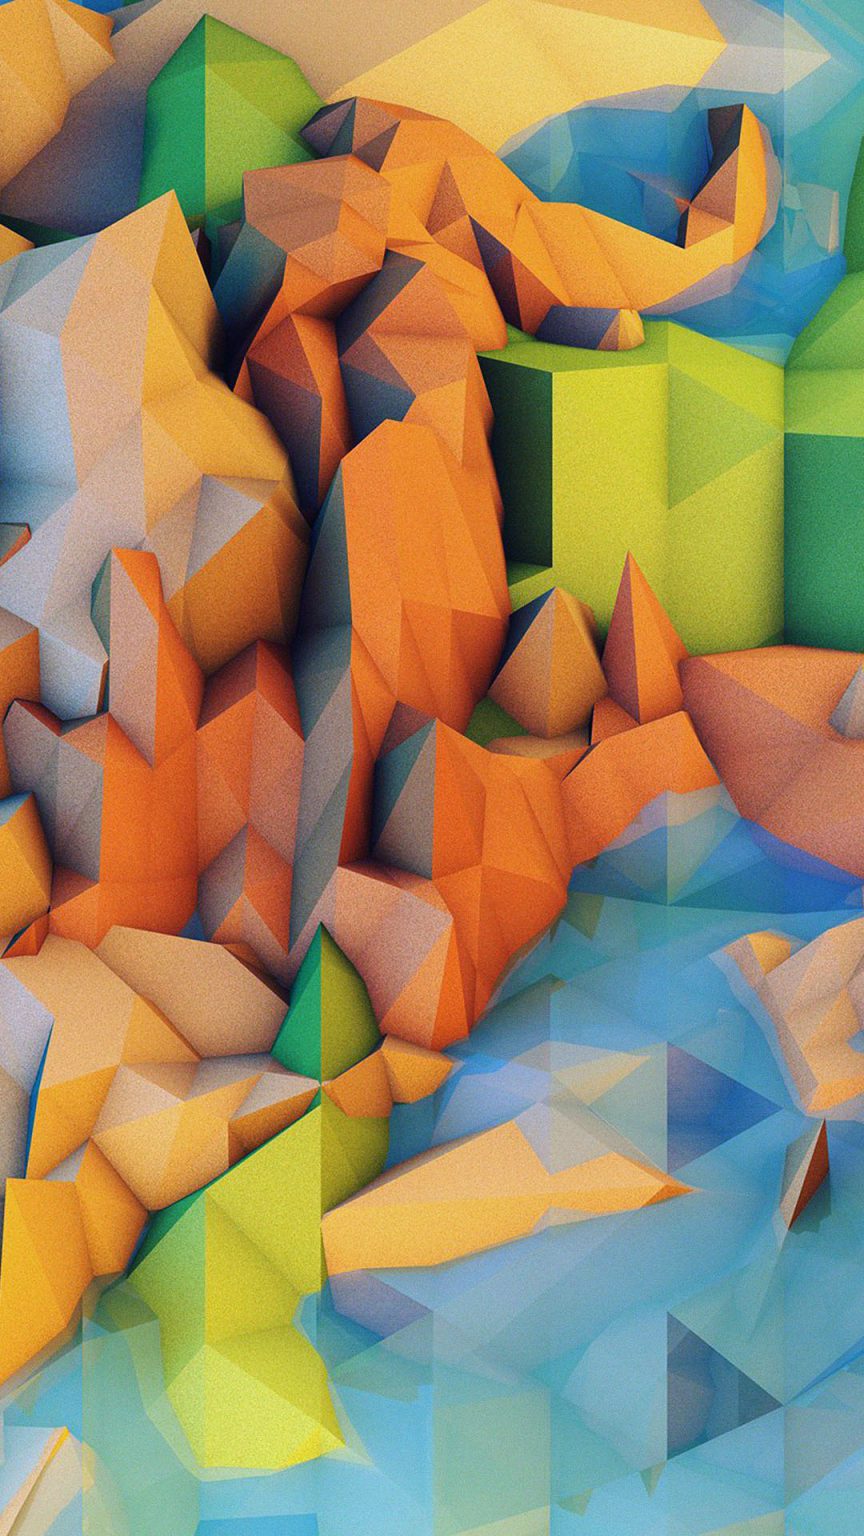 Mountains CGI Android Wallpaper